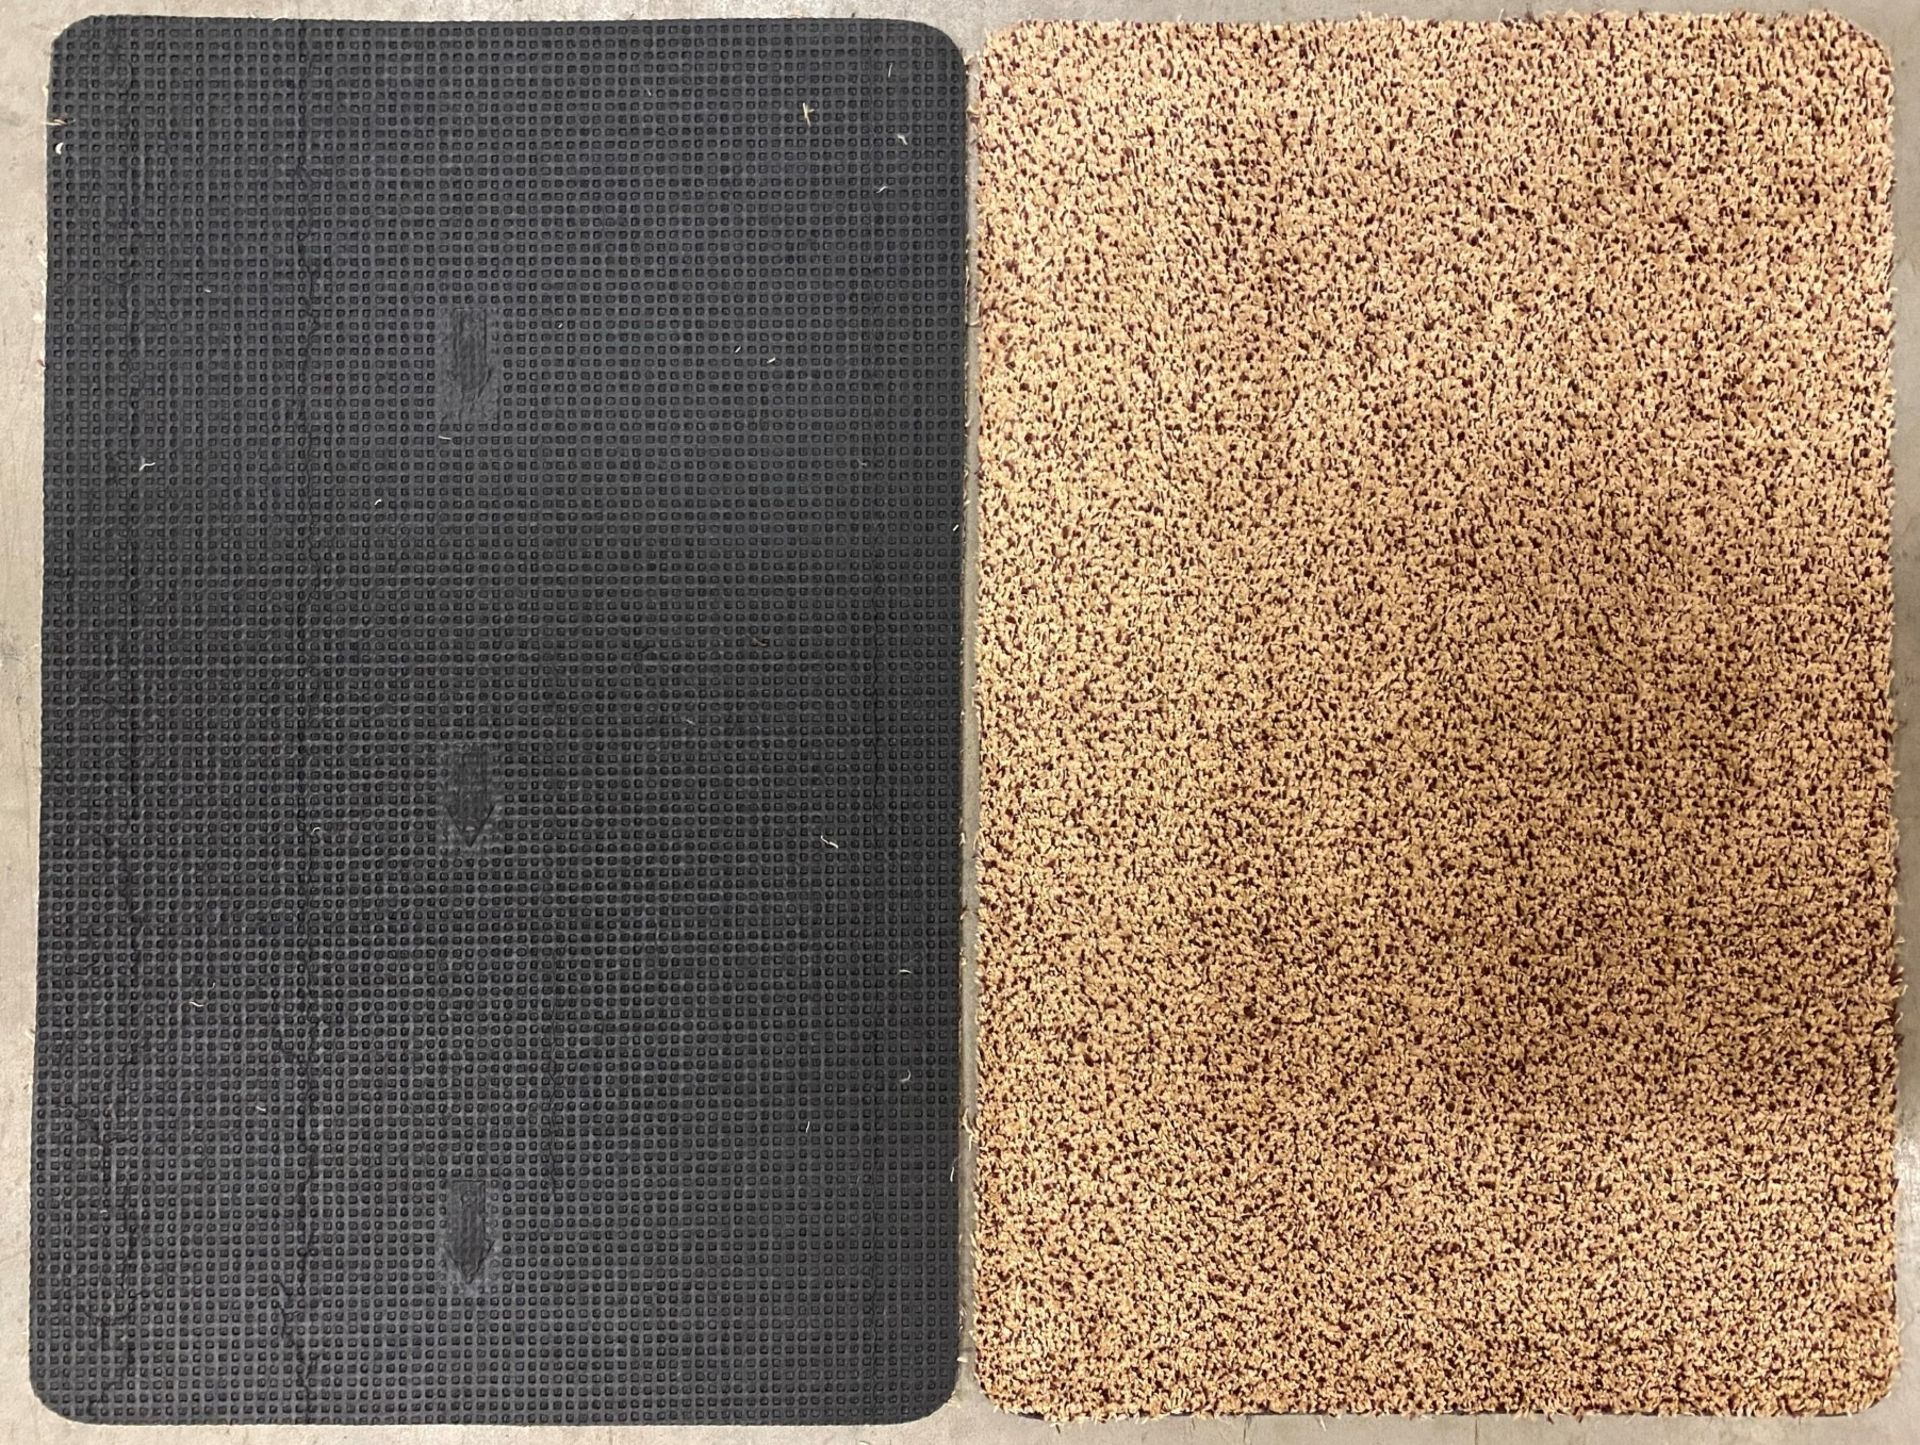 30 x Brown/Beige Speckled Rubber Backed Doormats - 60 x 40cm